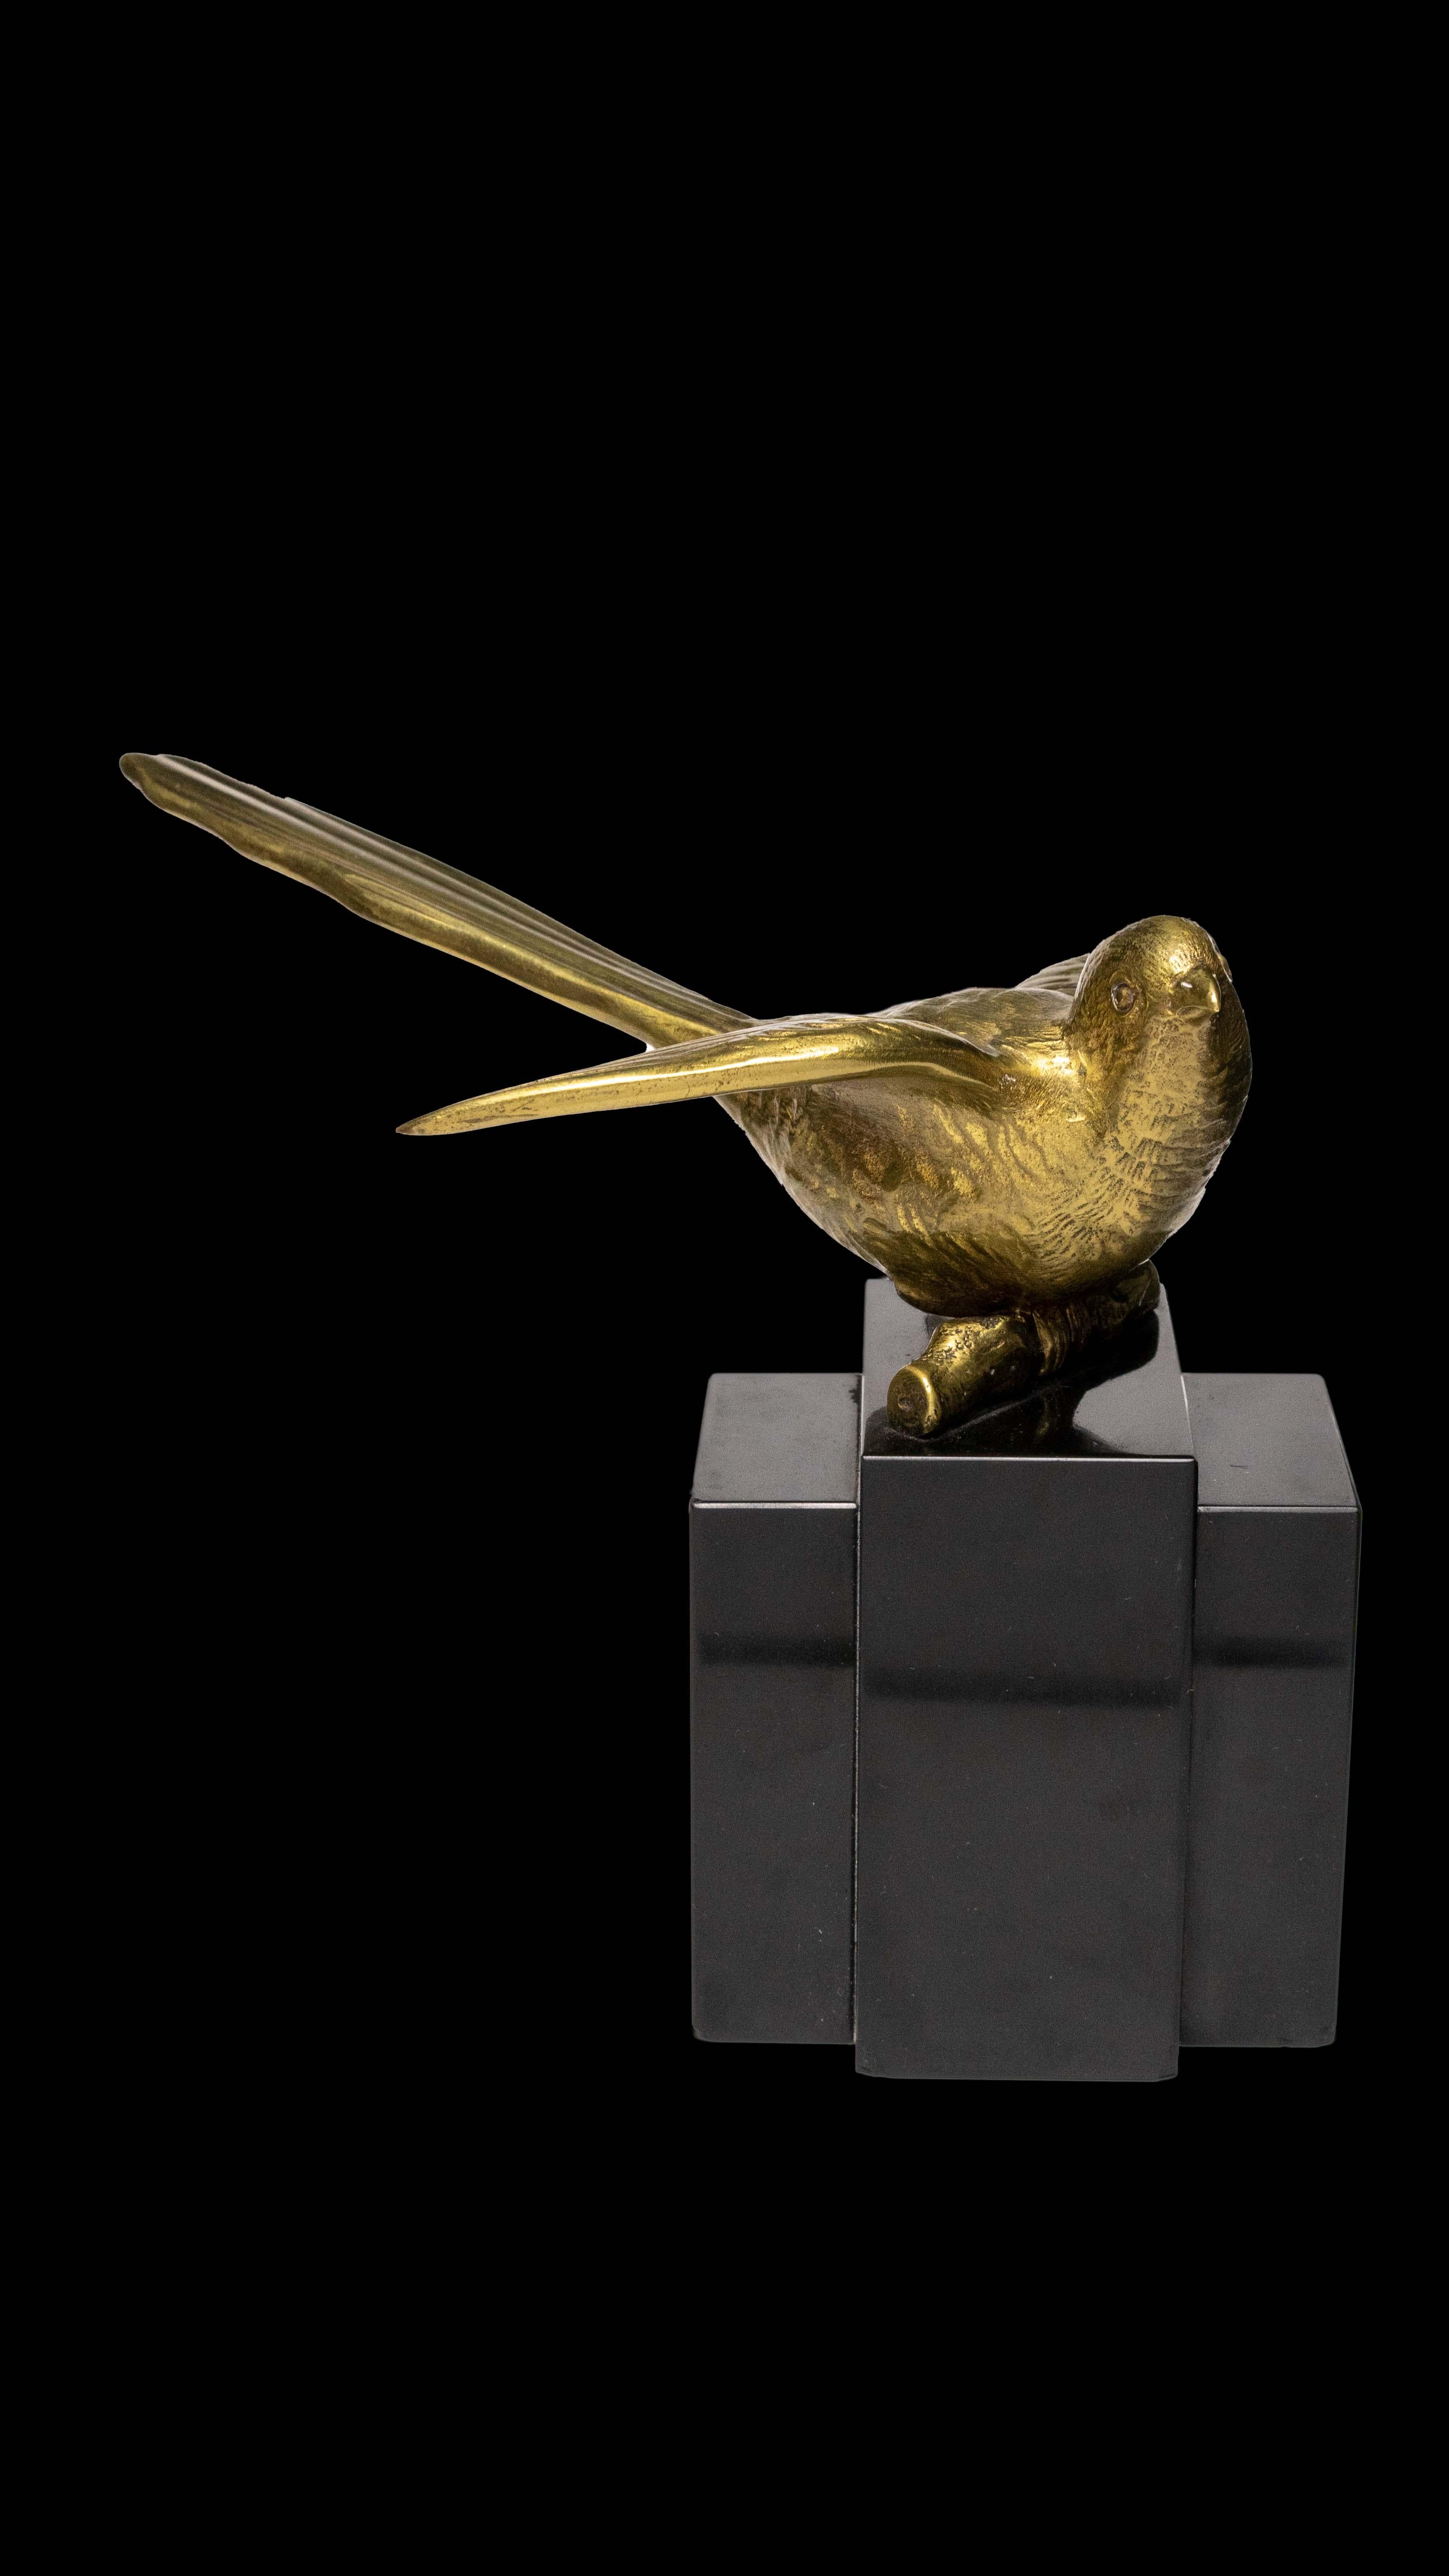 Beautiful 20th century bronze bird by George Lavraff

Measures: 6